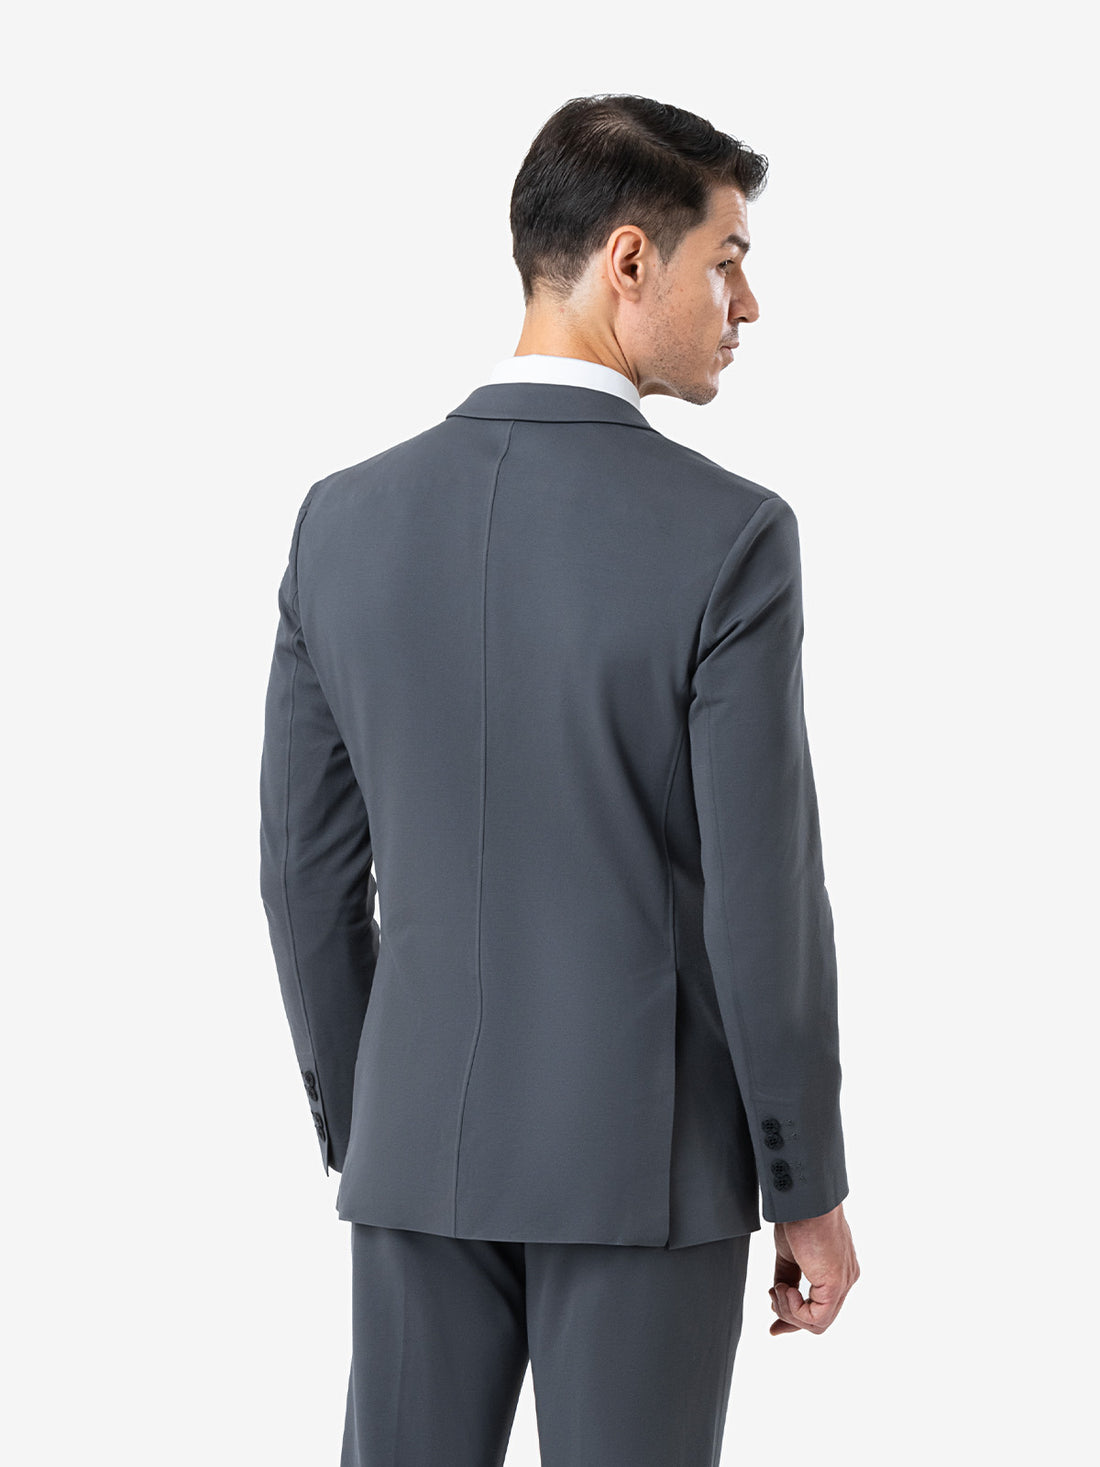 xSuit 4.0 Dark Grey | Super Stretch & Machine Washable Men's Suit